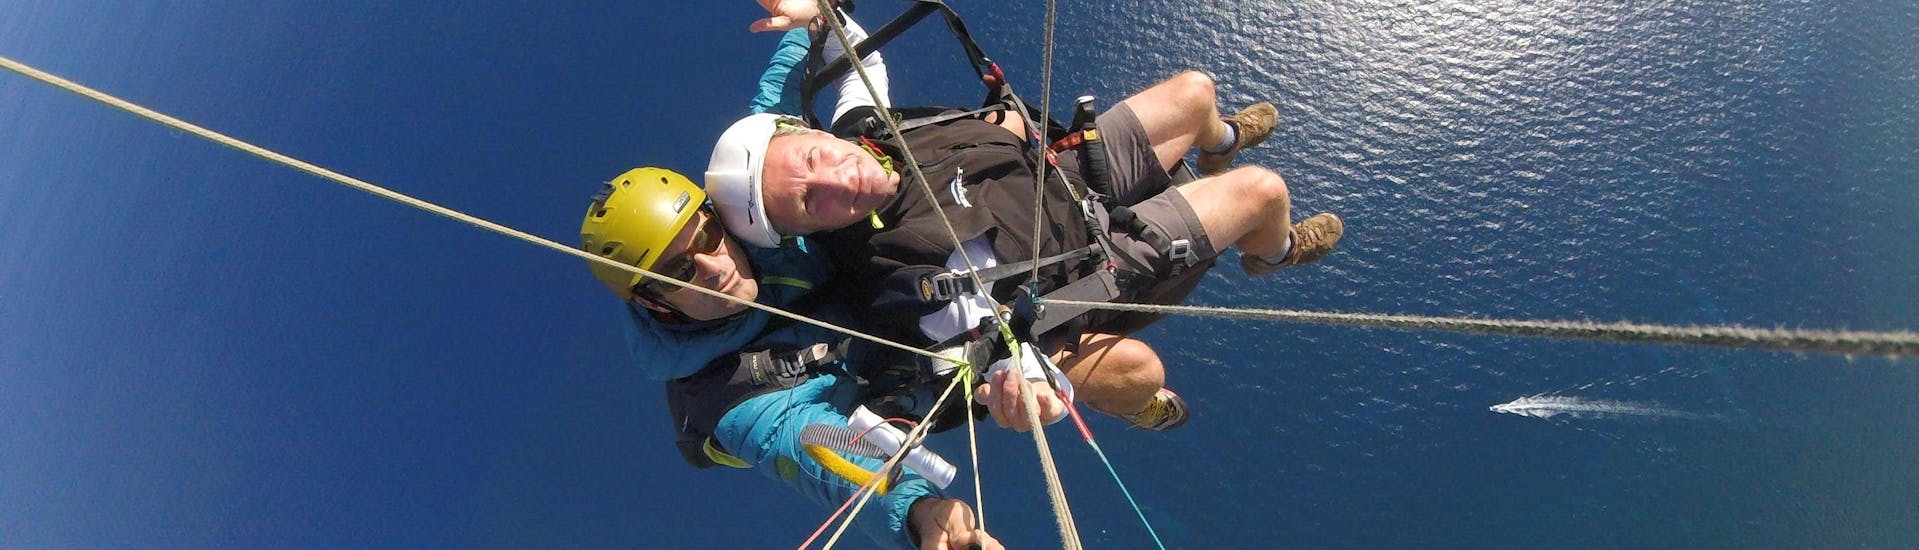 Akrobatik Tandem Paragliding (ab 14 J.).